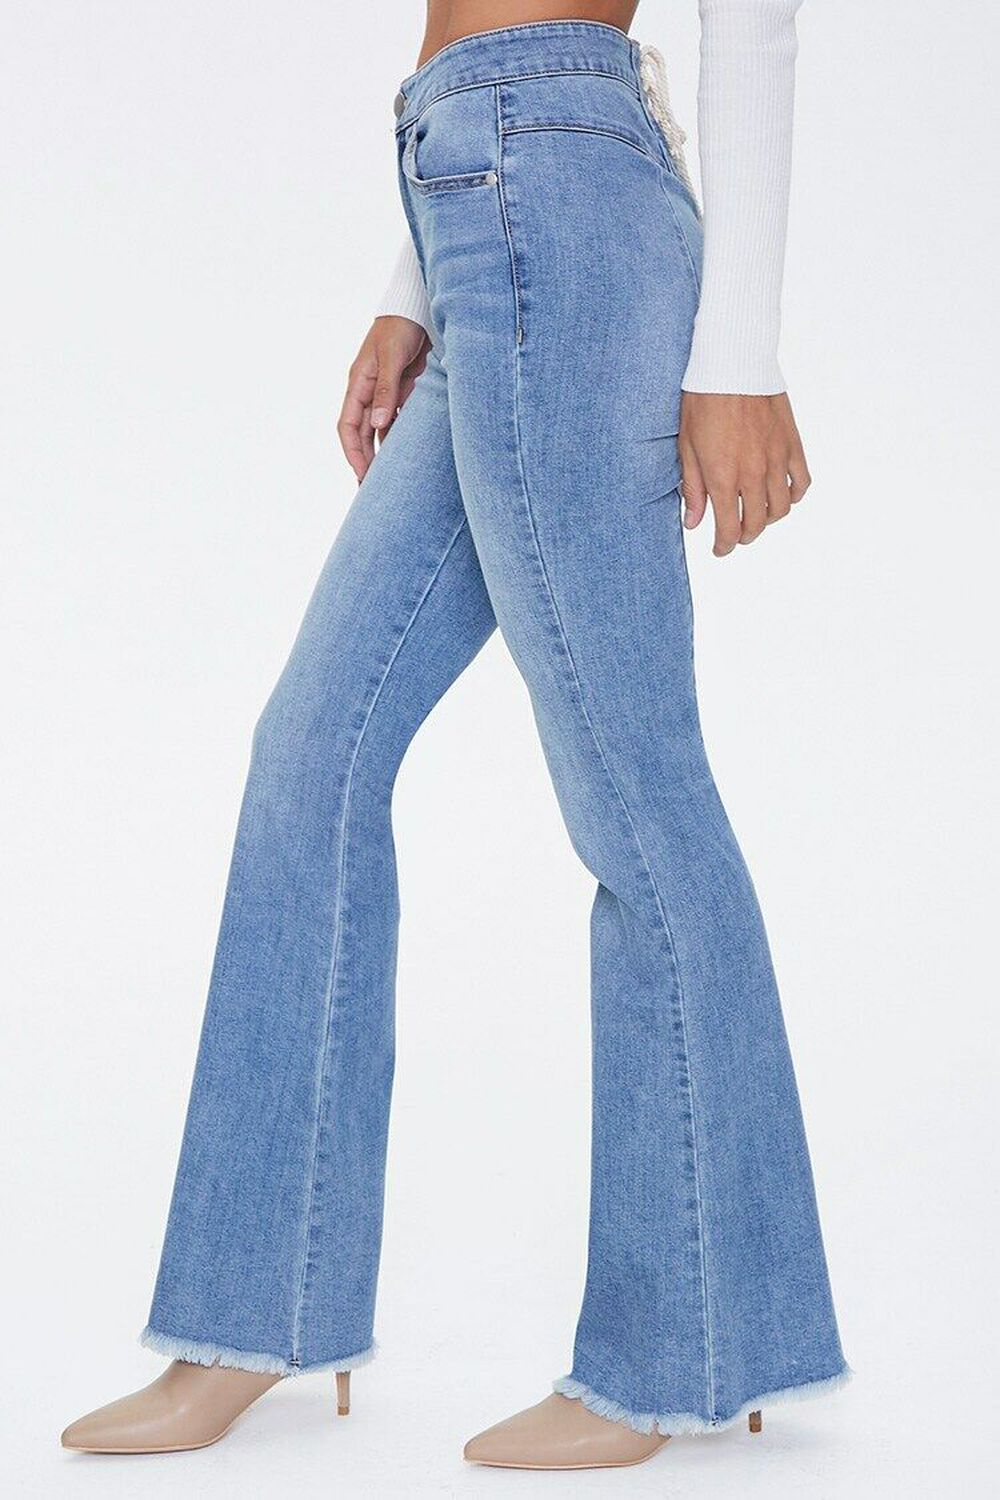 MEDIUM DENIM Lace-Back Flare Jeans, image 3